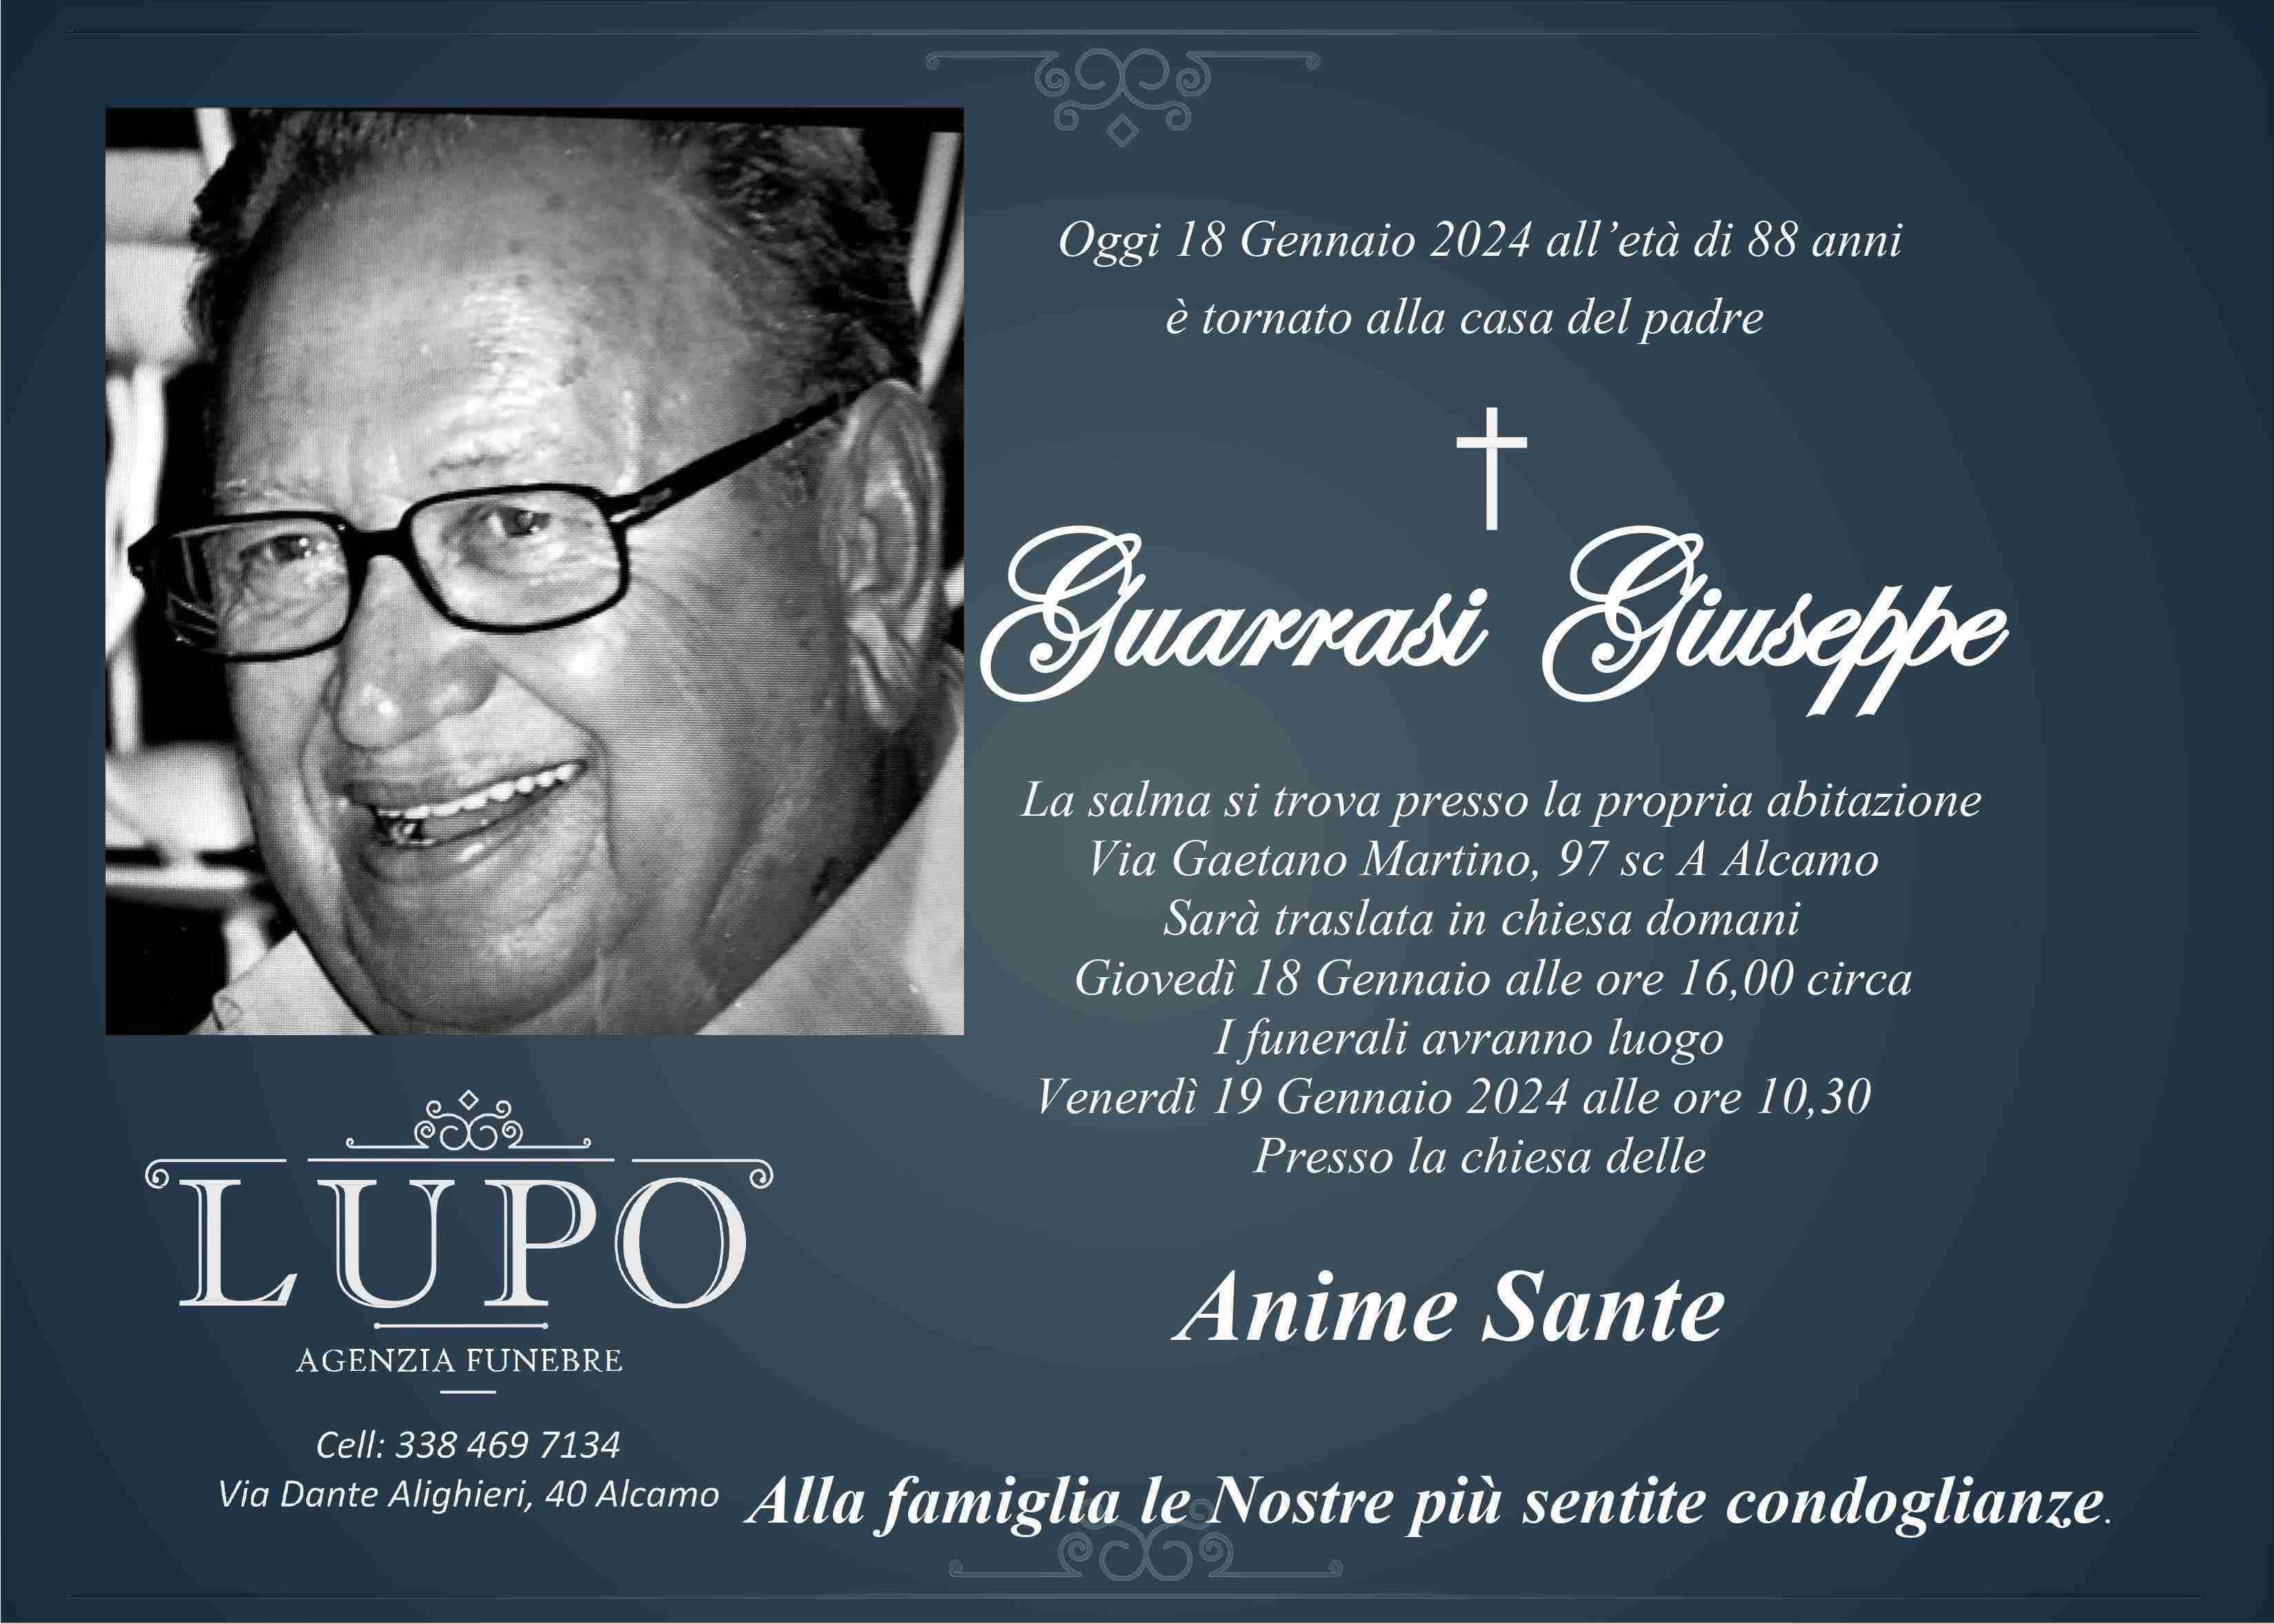 Giuseppe Guarrasi